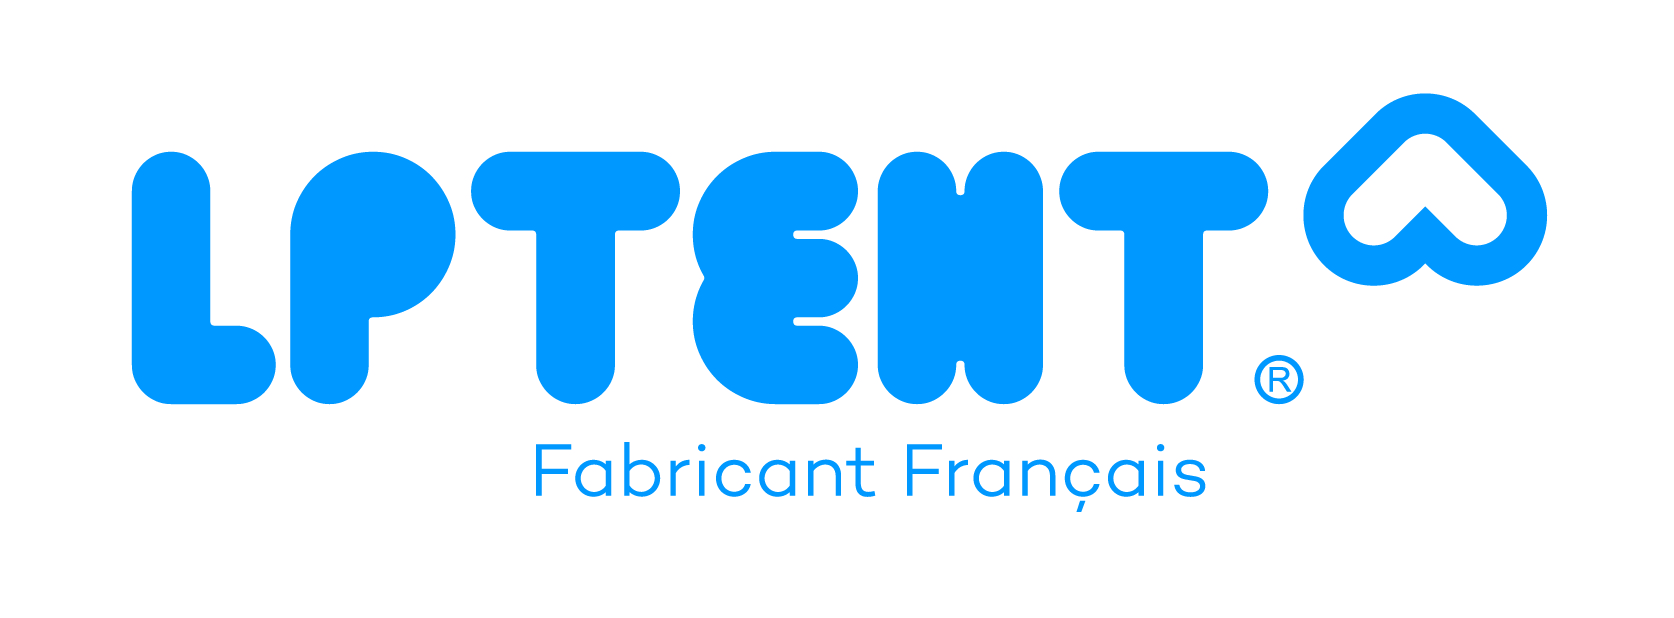 LPTENT logo